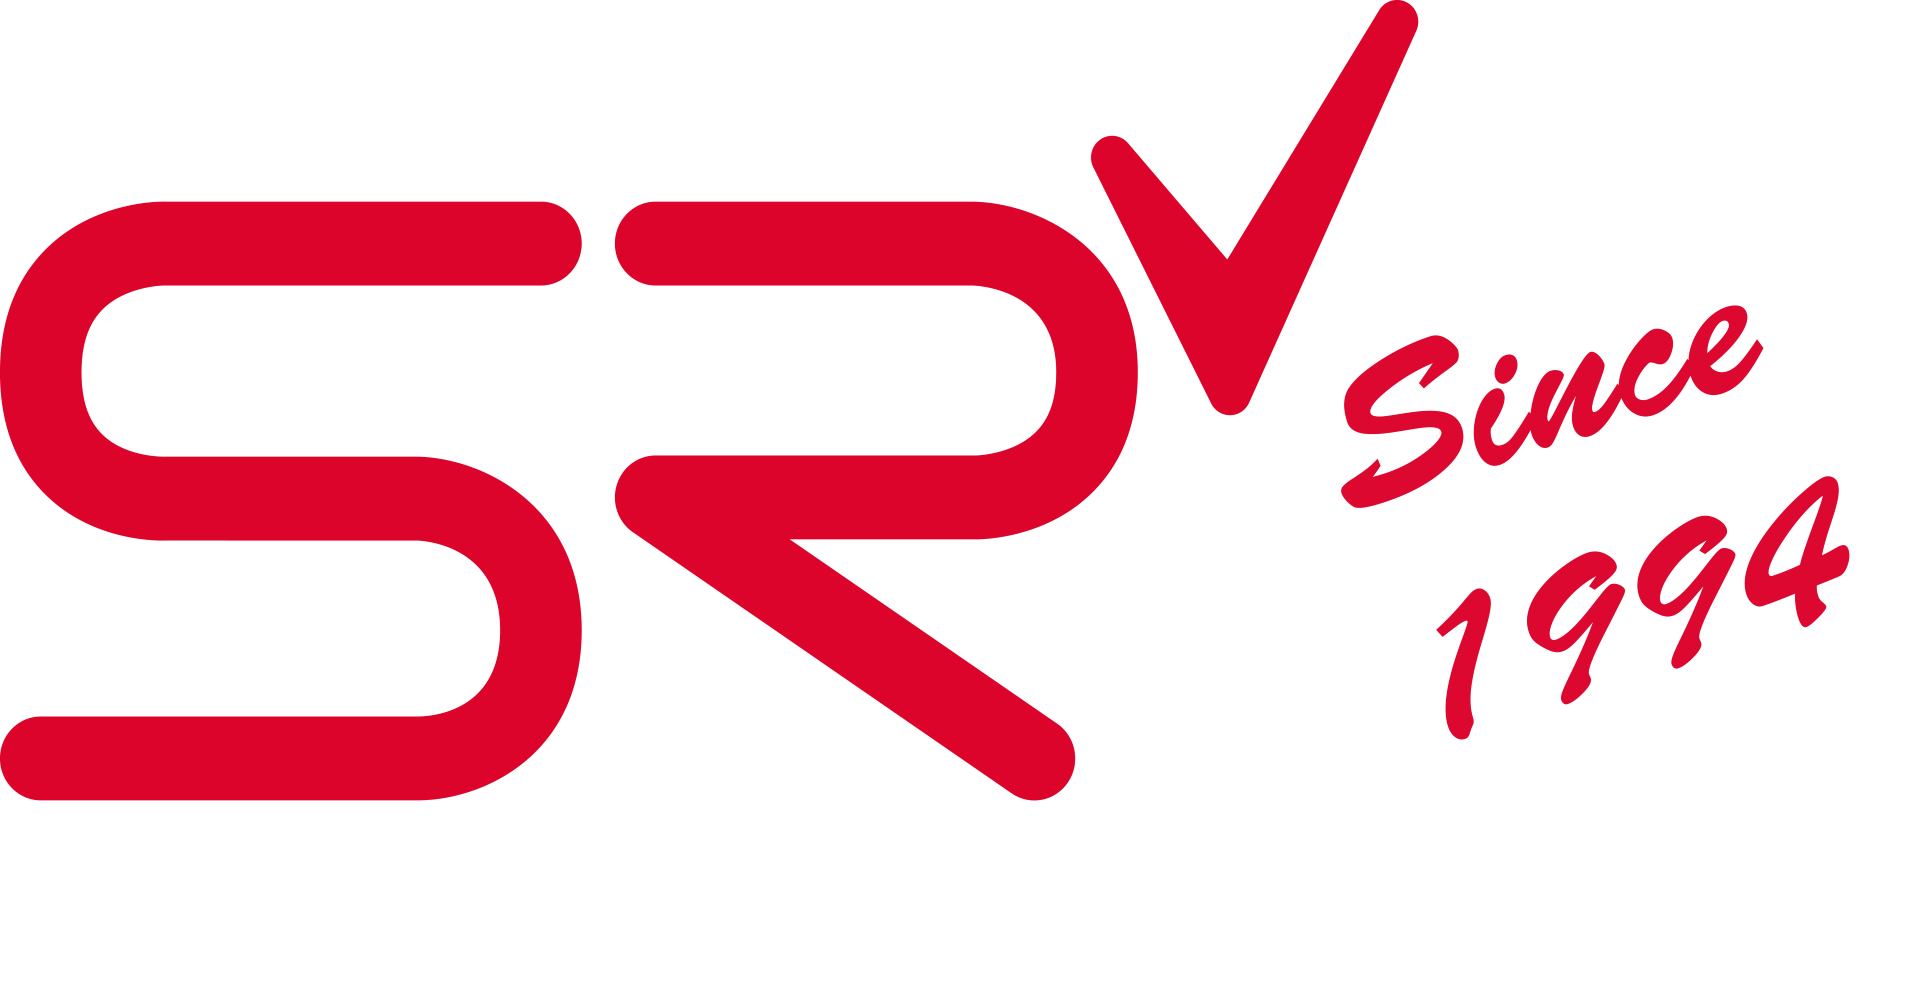 SR GmbH